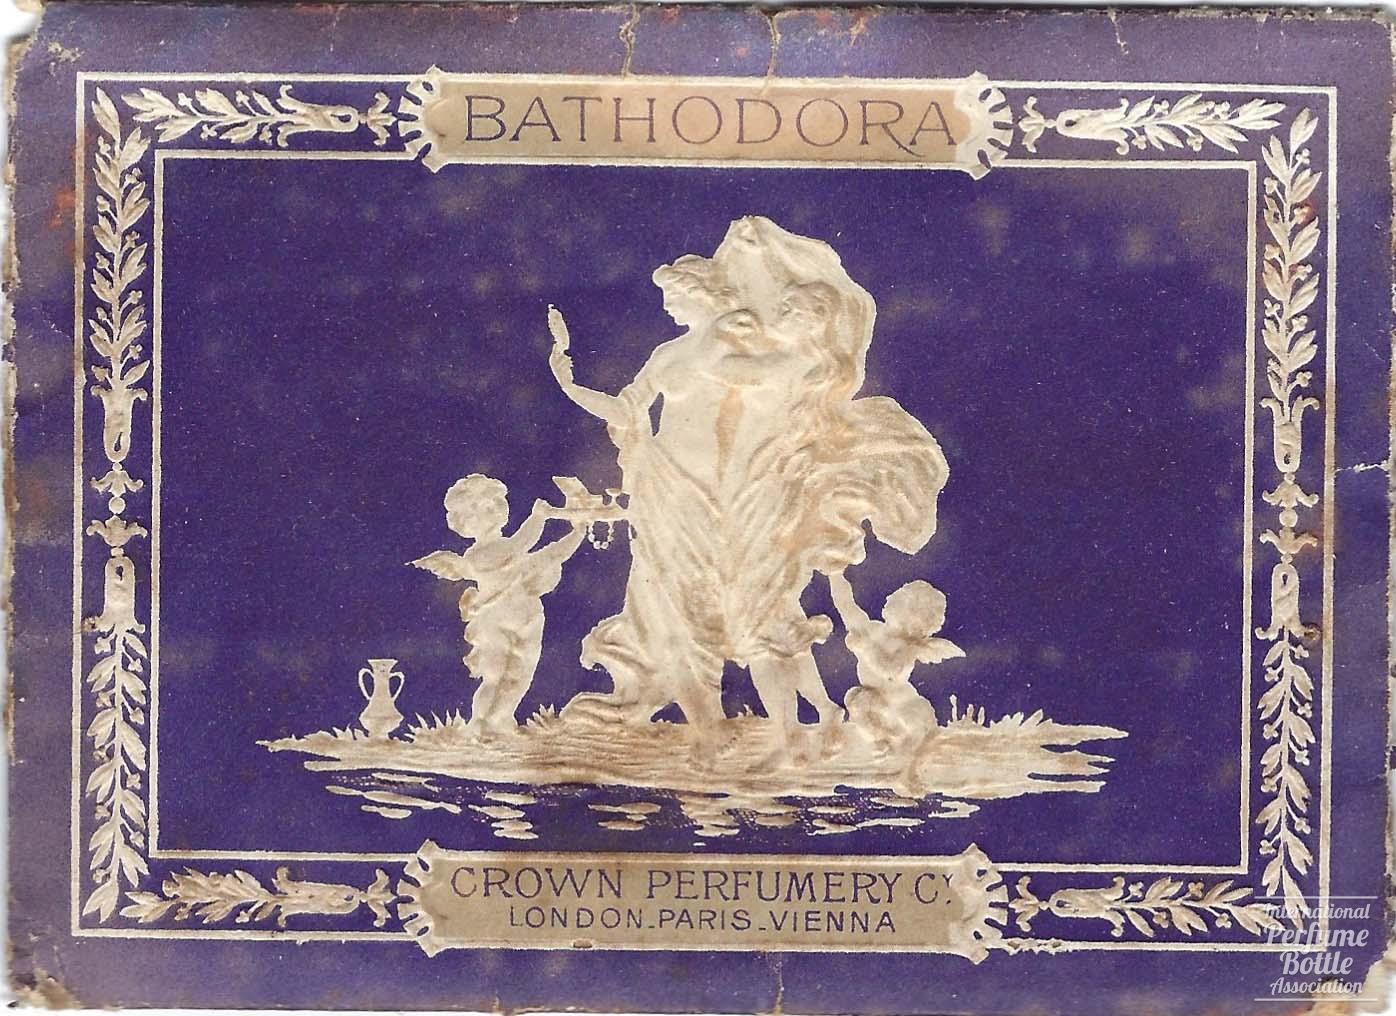 "Bathodora" Powder Envelope by Crown Perfumery Co.